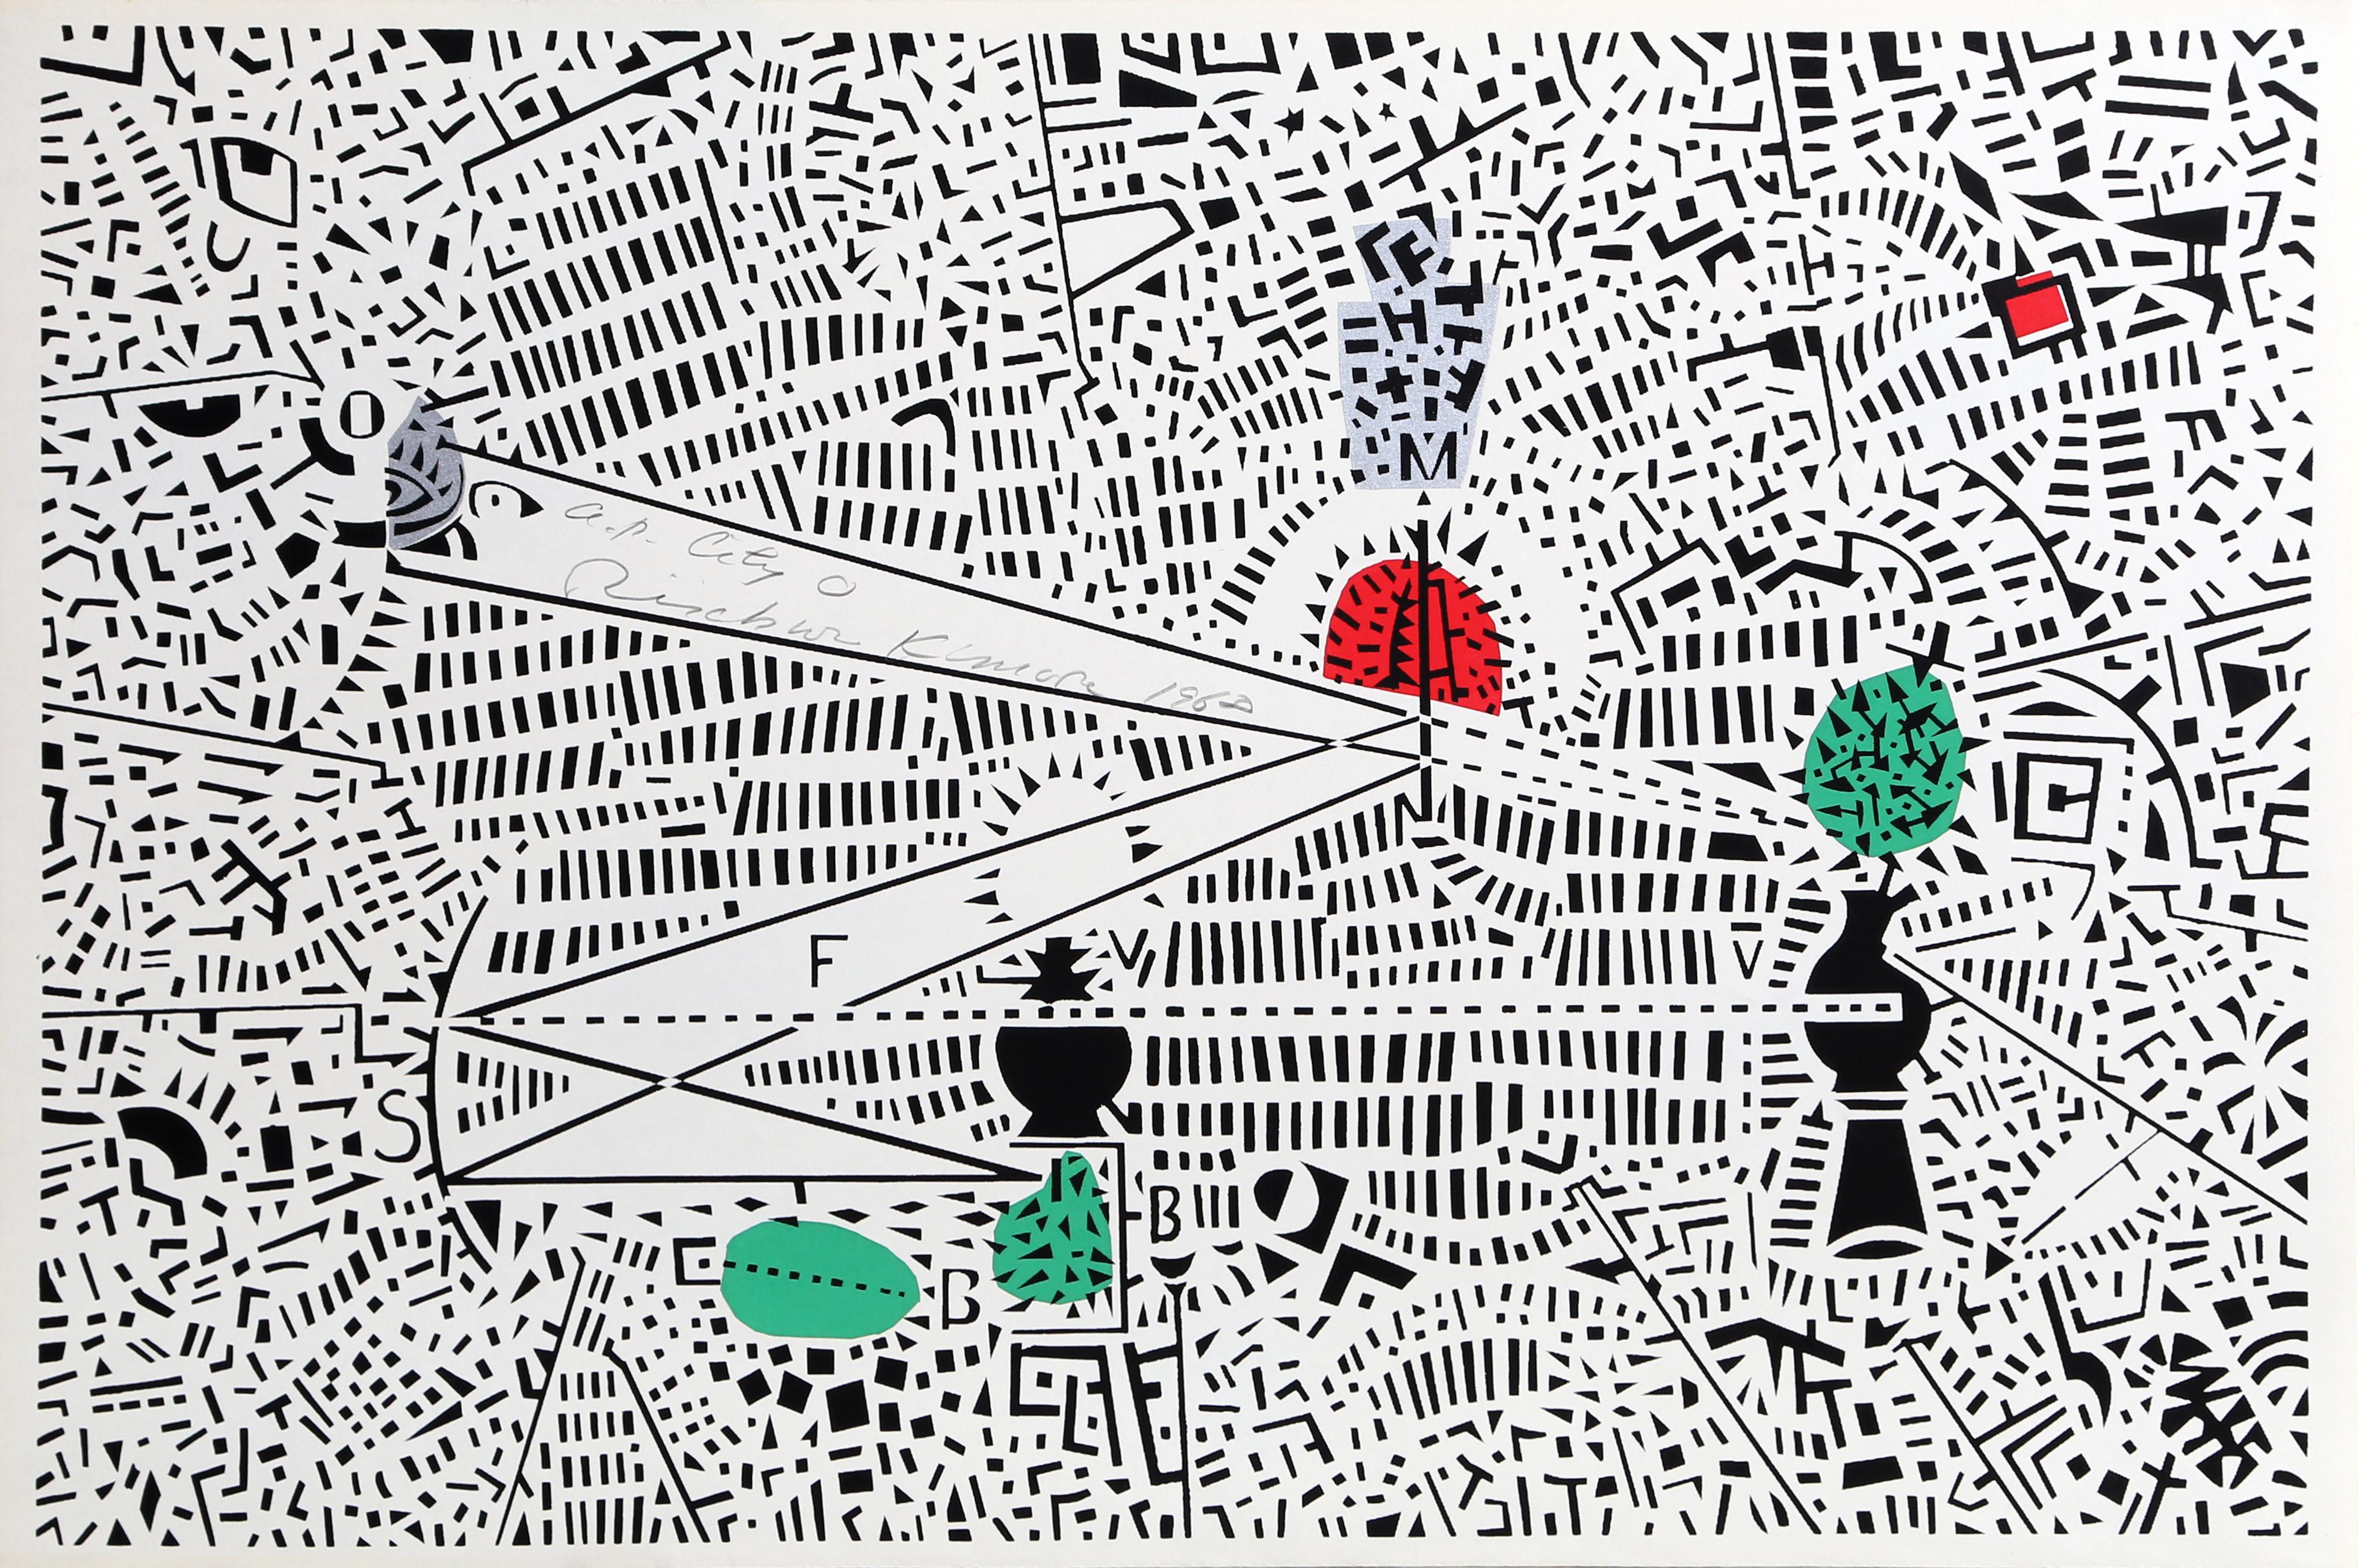 Artist: Risaburo Kimura, Japanese (1924 - )
Title: City 0
Year: 1968
Medium: Silkscreen, signed in pencil
Edition: AP
Size: 12.5 x 19 in. (31.75 x 48.26 cm)